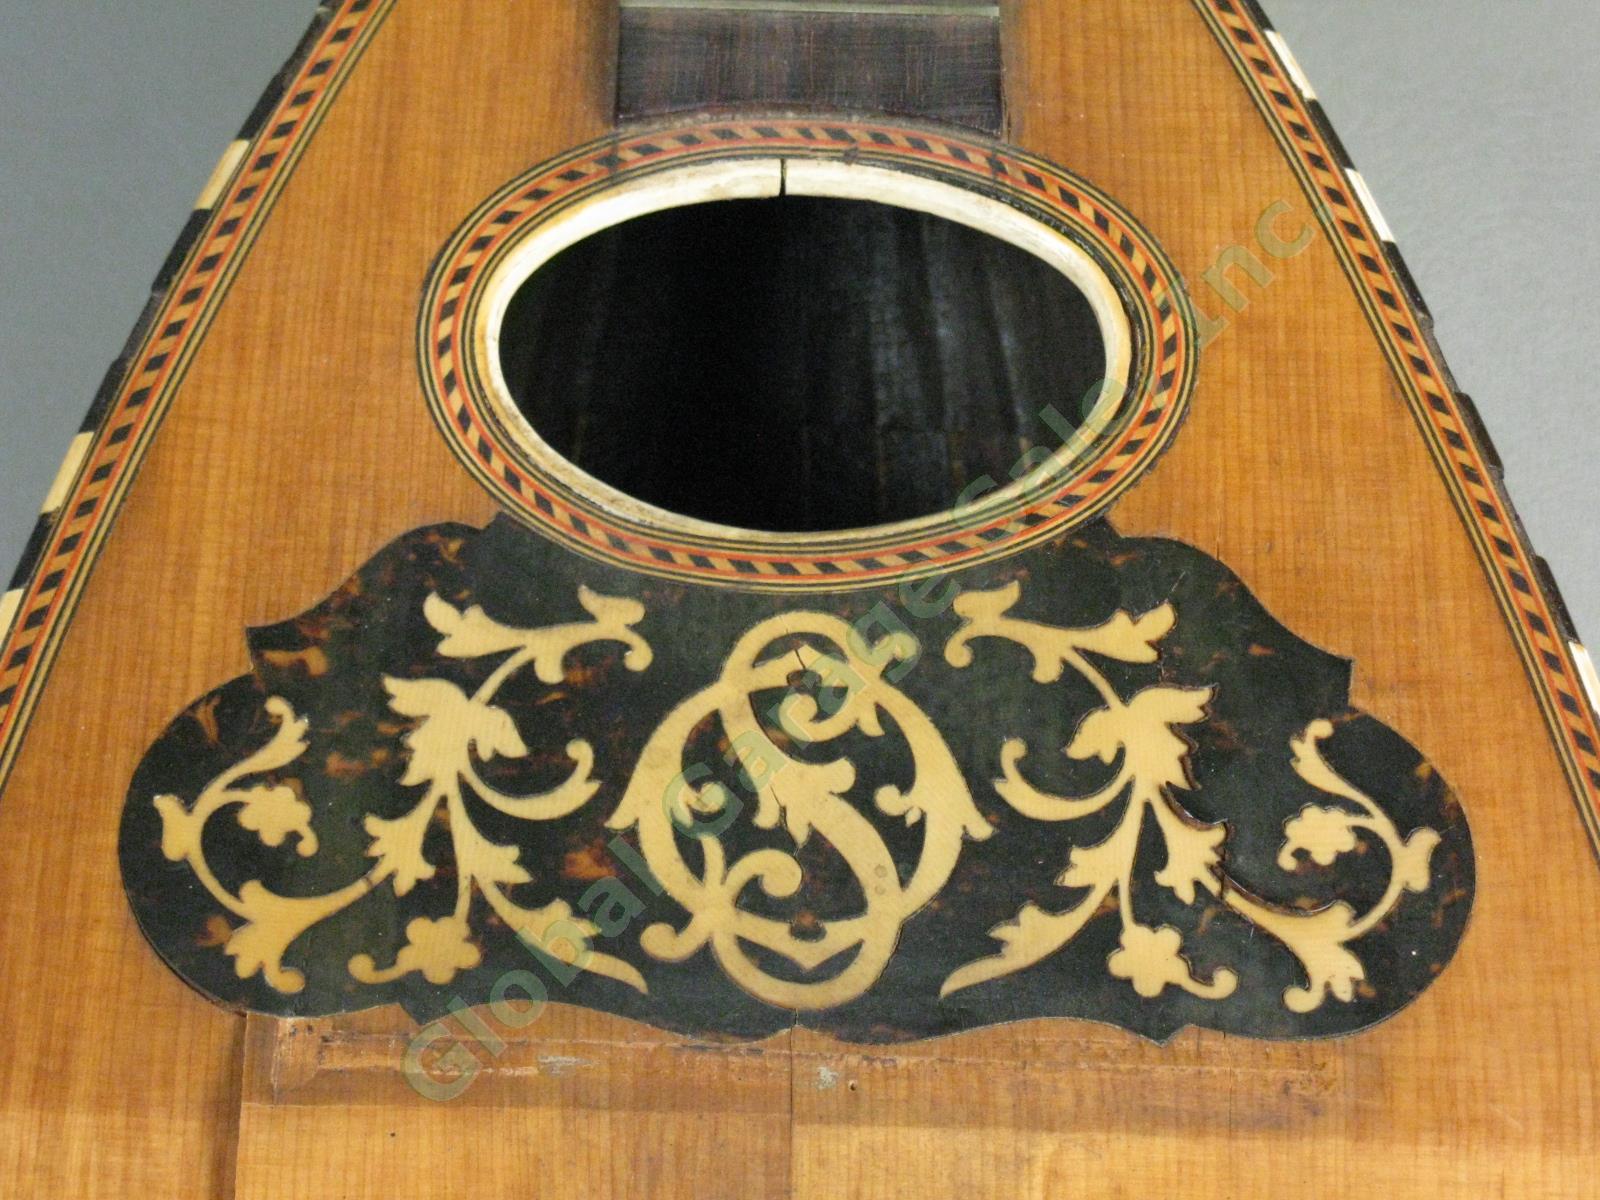 Rare Antique Early 1900s Oscar Schmidt 12 String Bowl Back Mandolin Parts/Repair 3